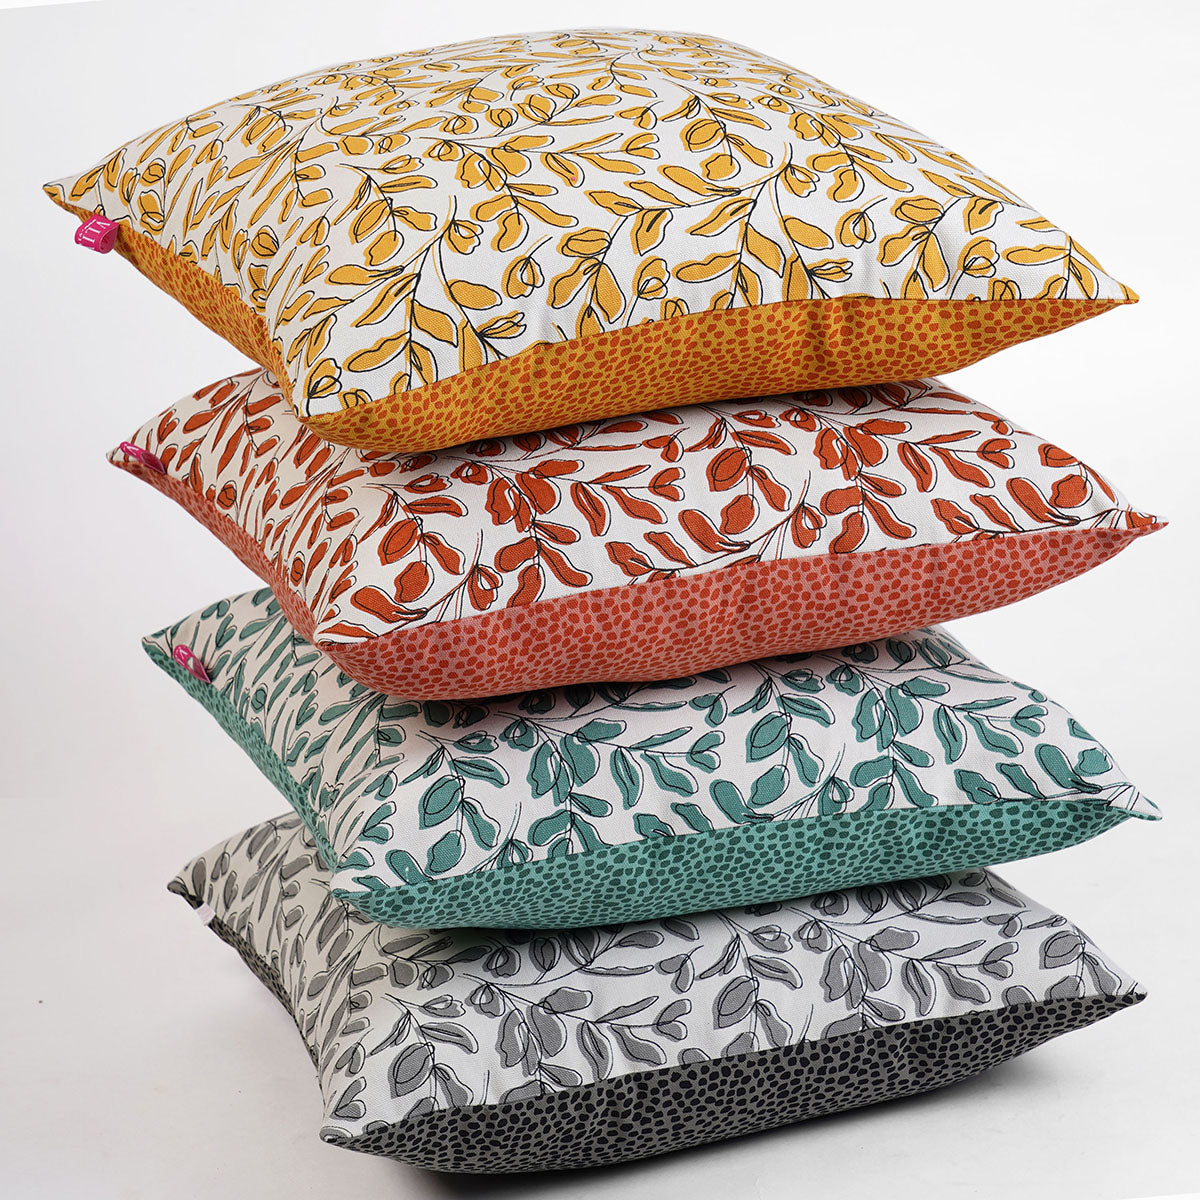 MODERN RETRO - Aqua Green reversible cotton throw pillow cover, leaf print, sizes available